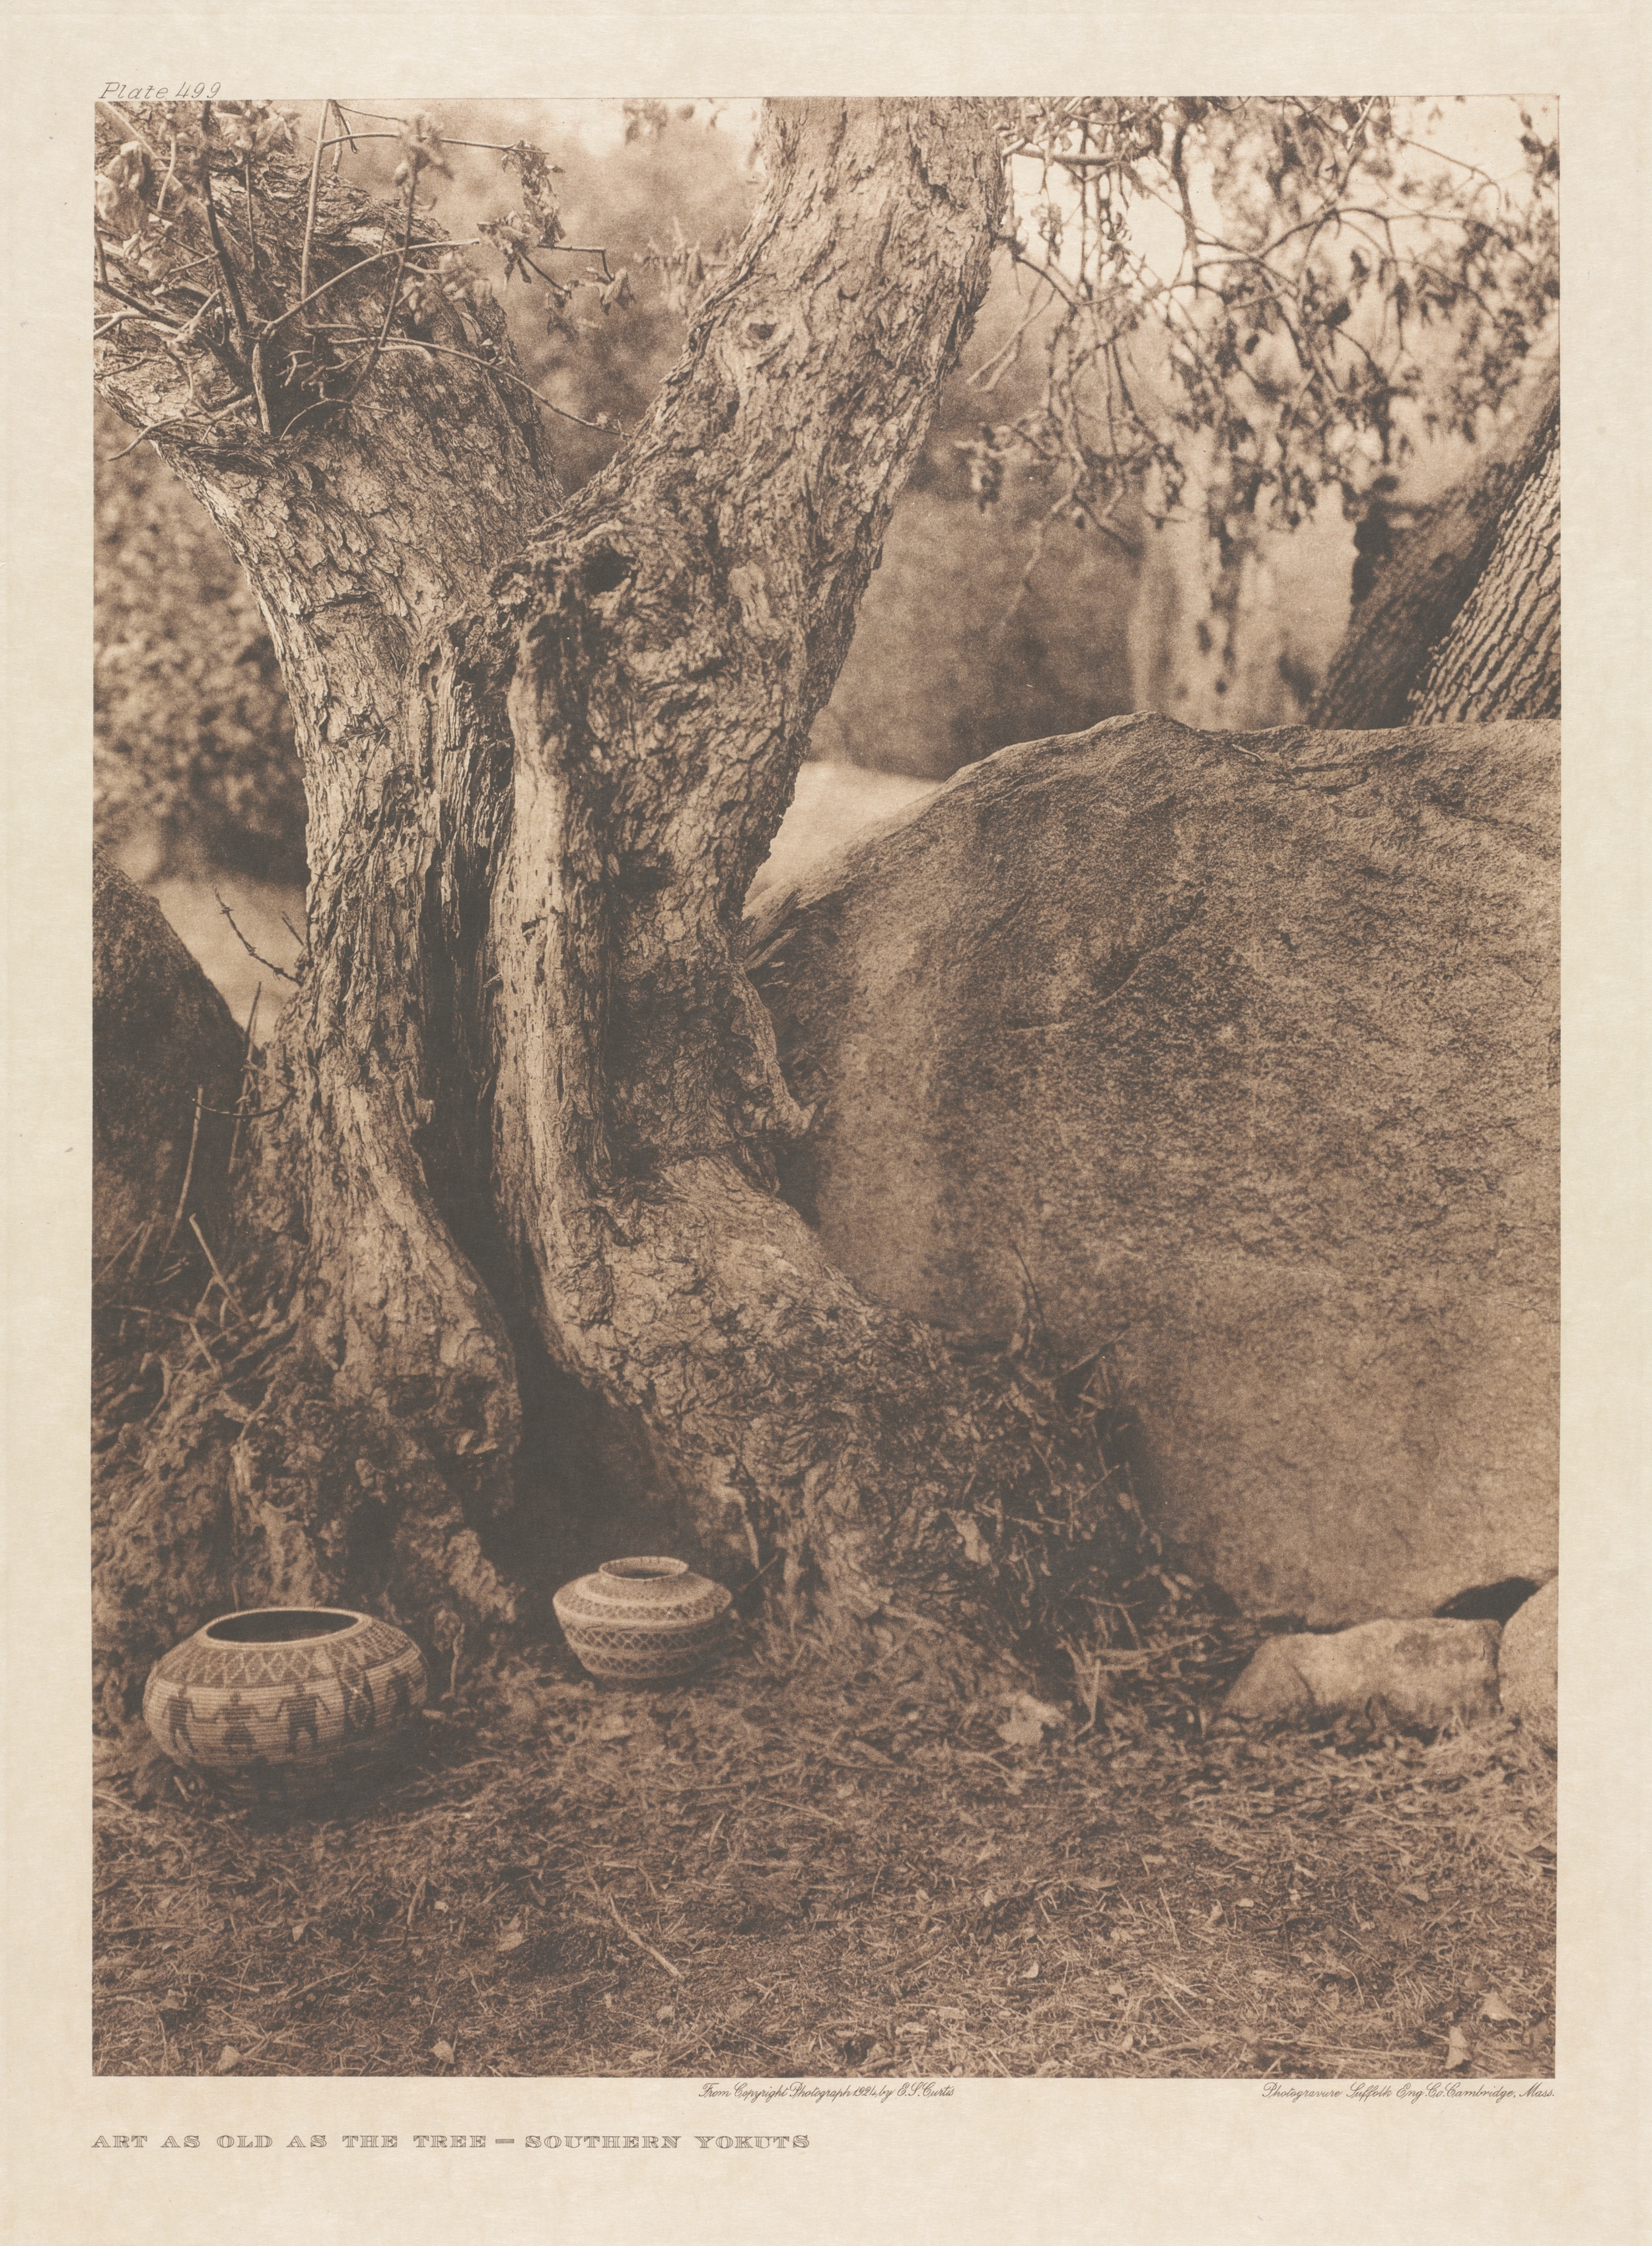 Portfolio XIV, Plate 499: Art as Old as the Tree - Southern Yokuts